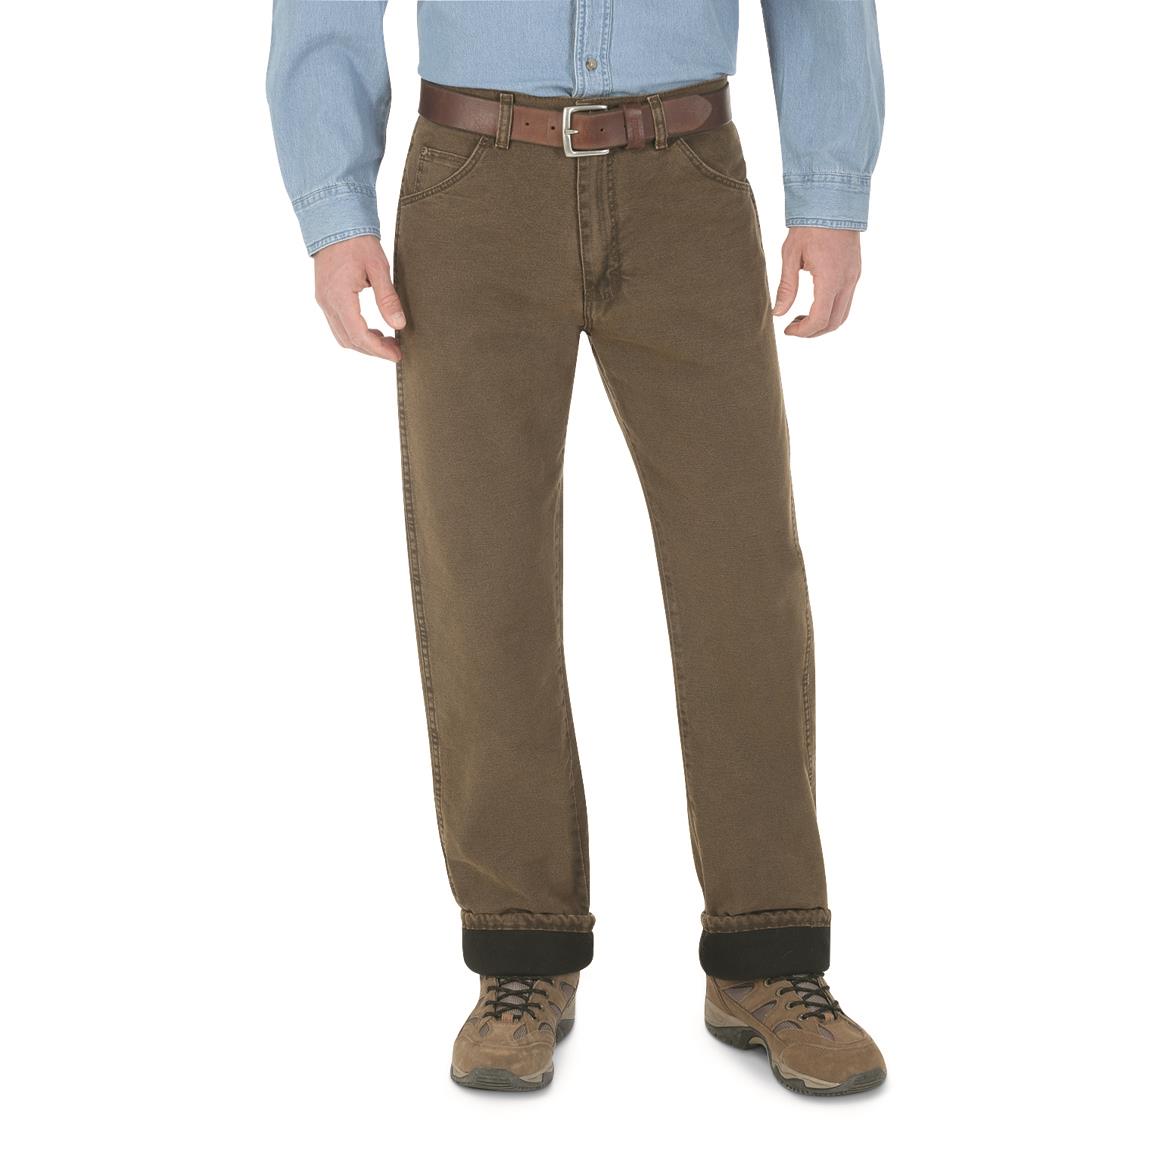 Wrangler Men's Rugged Wear Thermal Jeans, Brown